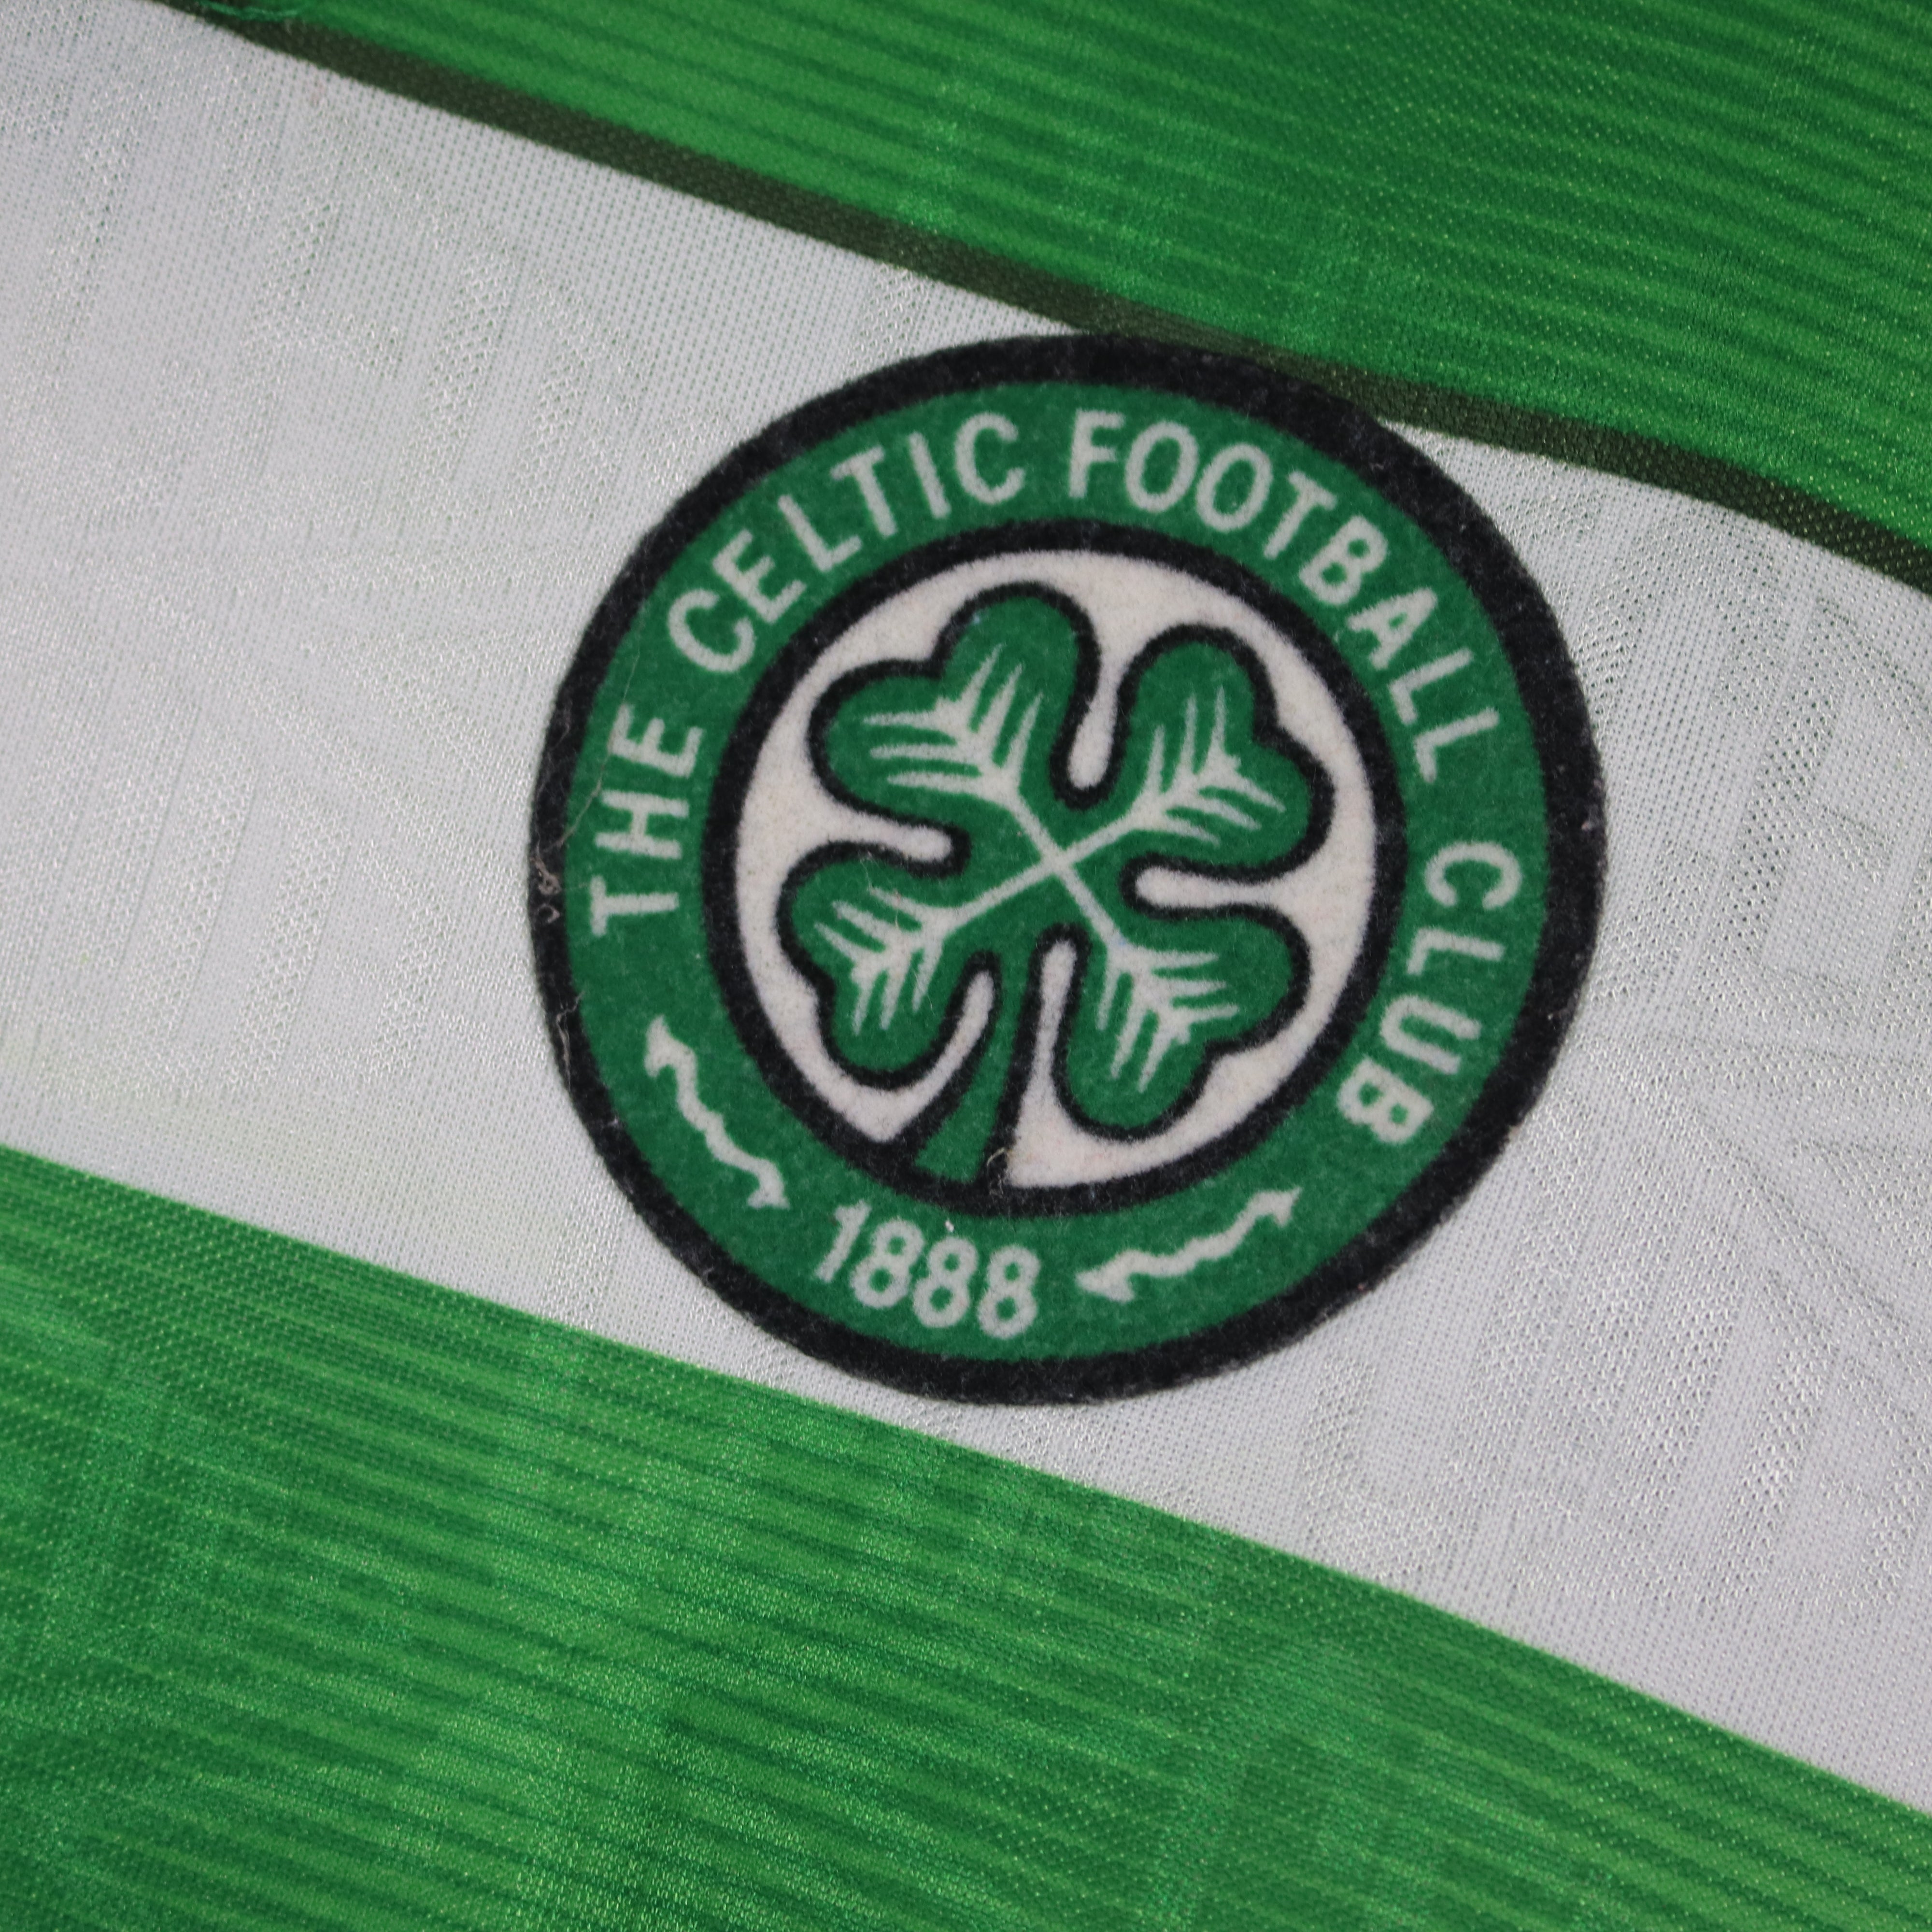 1992-93 Celtic Retro Jersey